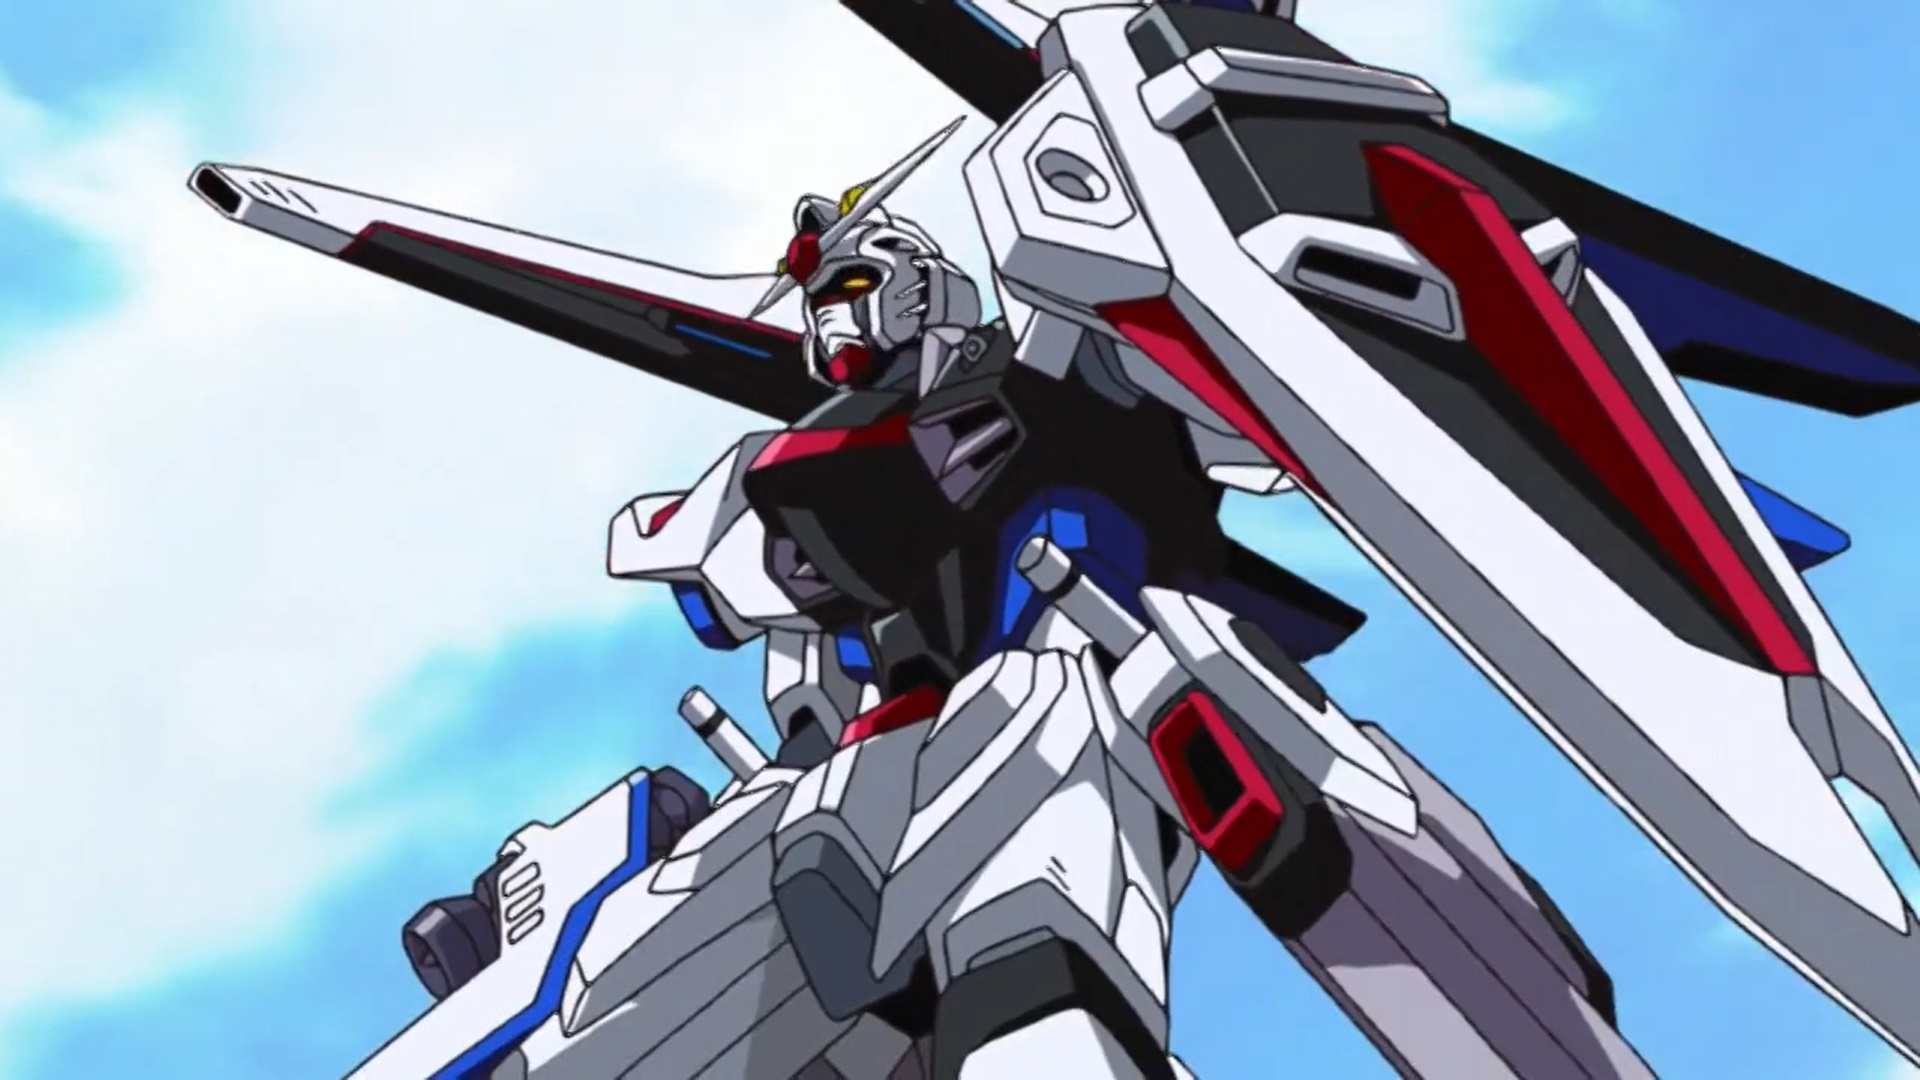 Anime 1920x1080 anime mechs Anime screenshot Mobile Suit Gundam SEED Gundam Super Robot Taisen Freedom Gundam artwork digital art